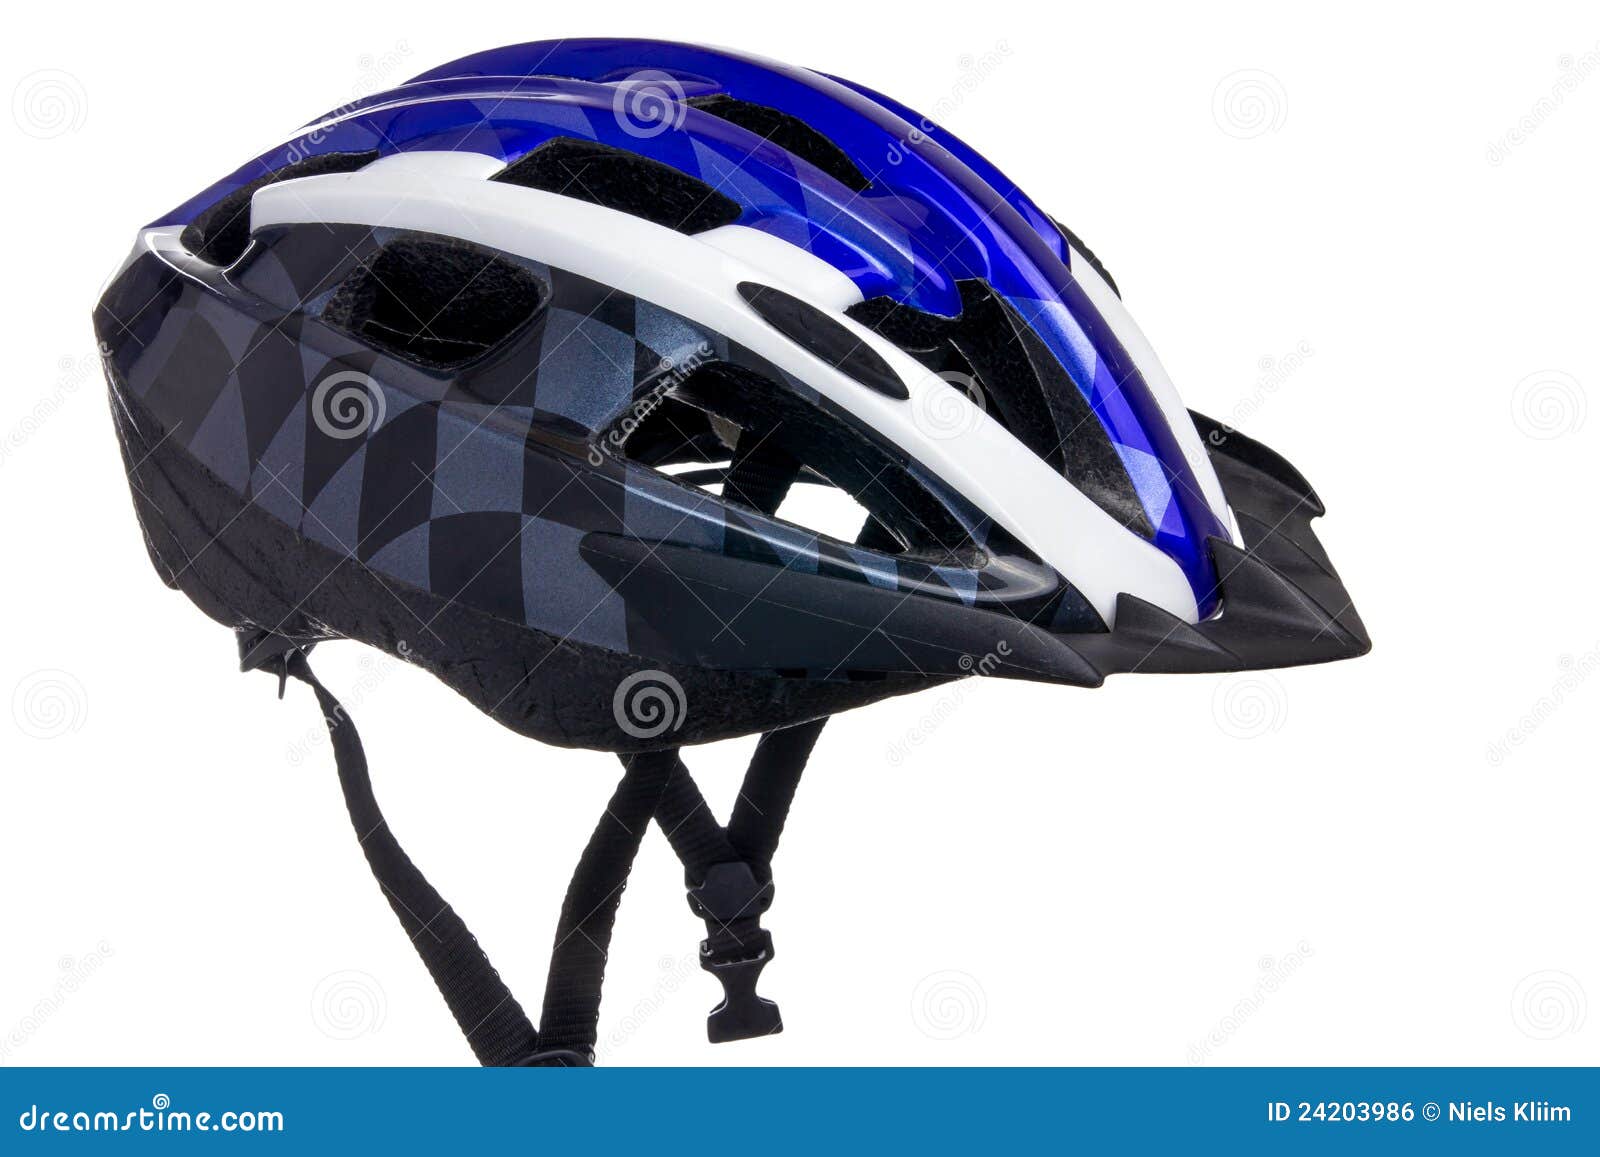 clipart bike helmet - photo #28